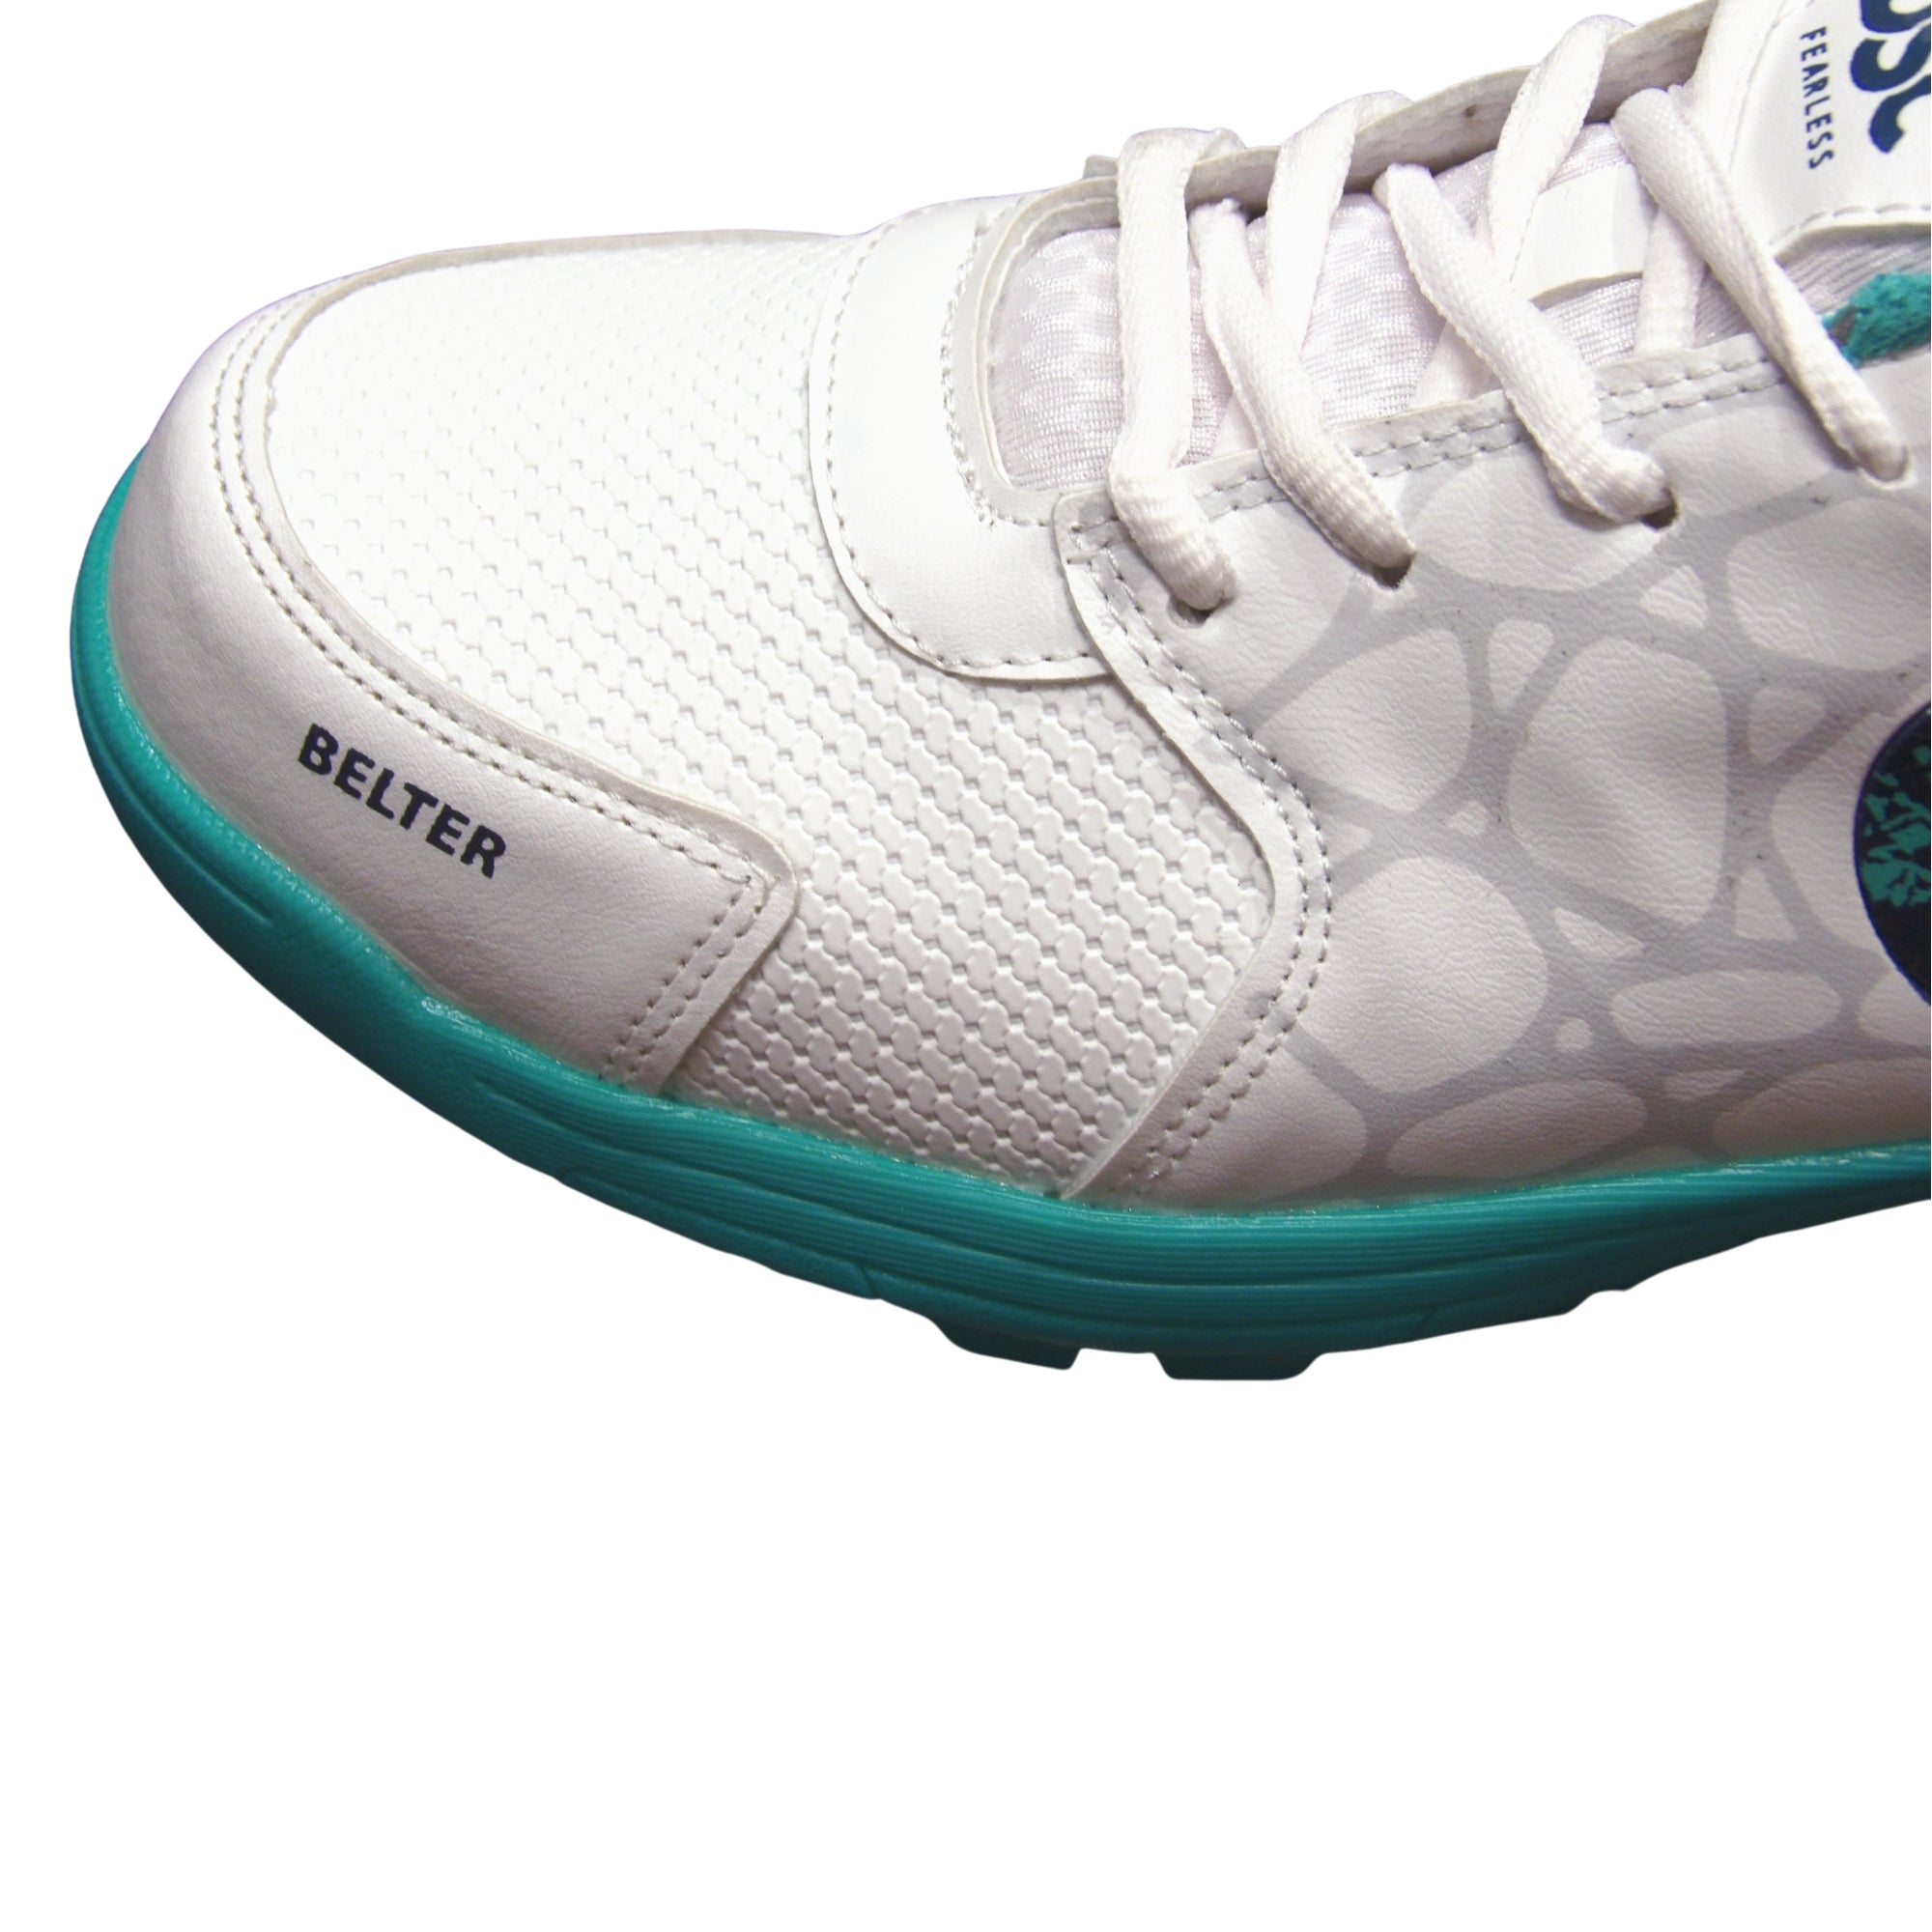 DSC Cricket Shoes, Model Belter - Seagreen/White